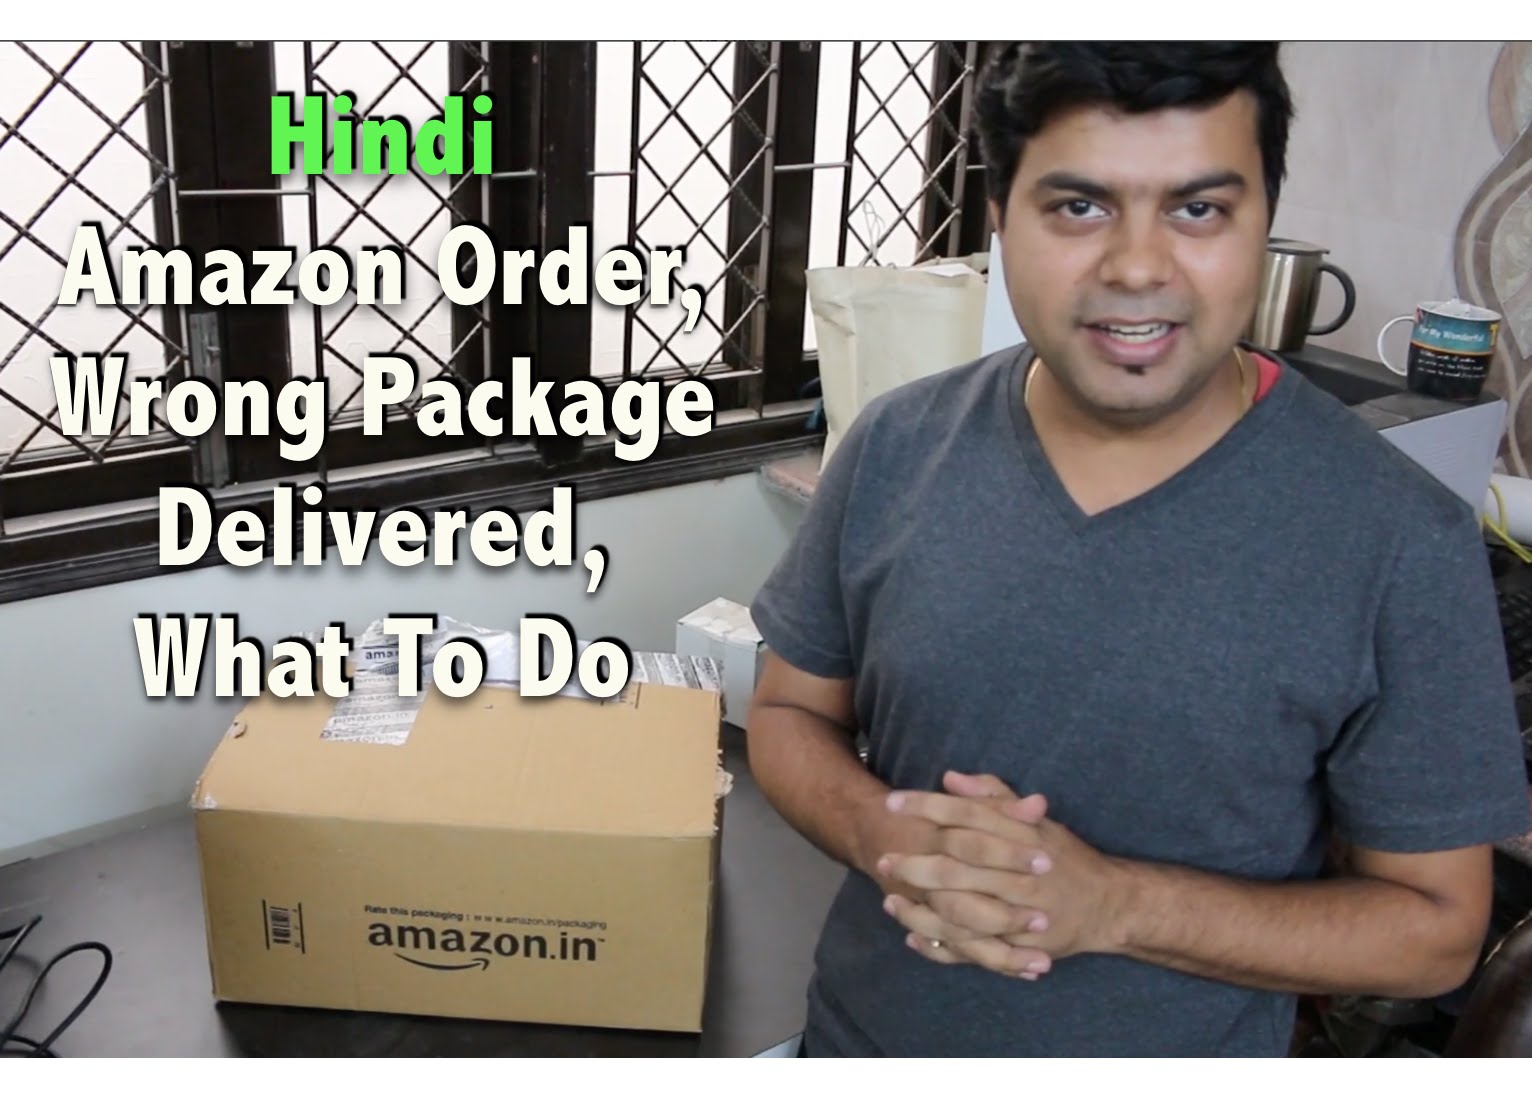 Wrong order. Not delivered Амазон. Delivered err. Not delivered Amazon.